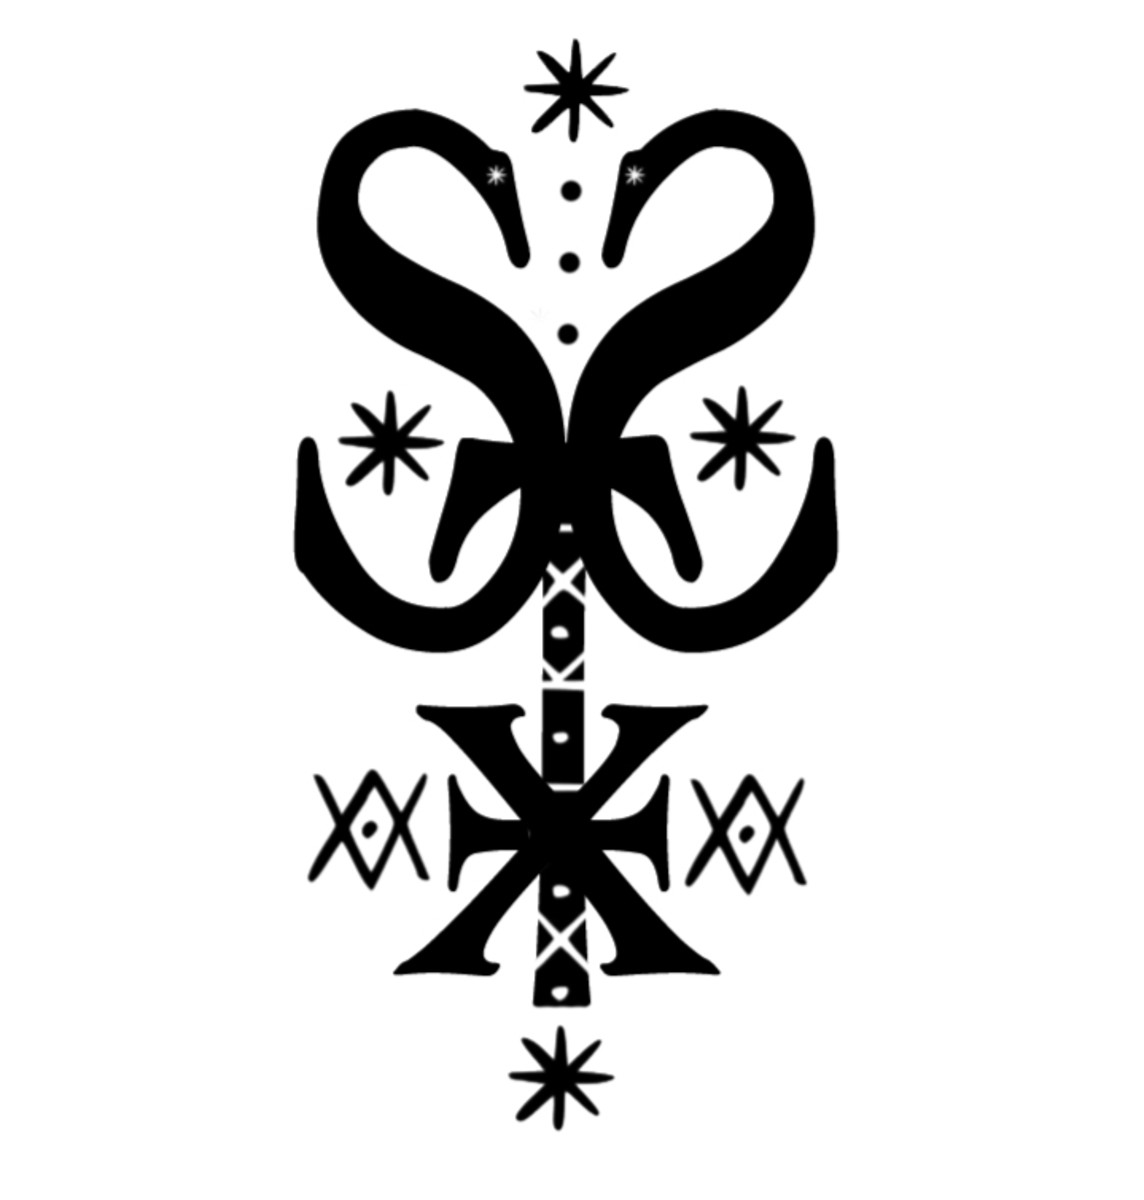 St. Expedite's Ritual symbol, copyright 2014 Denise Alvarado, all right's reserved worldwide